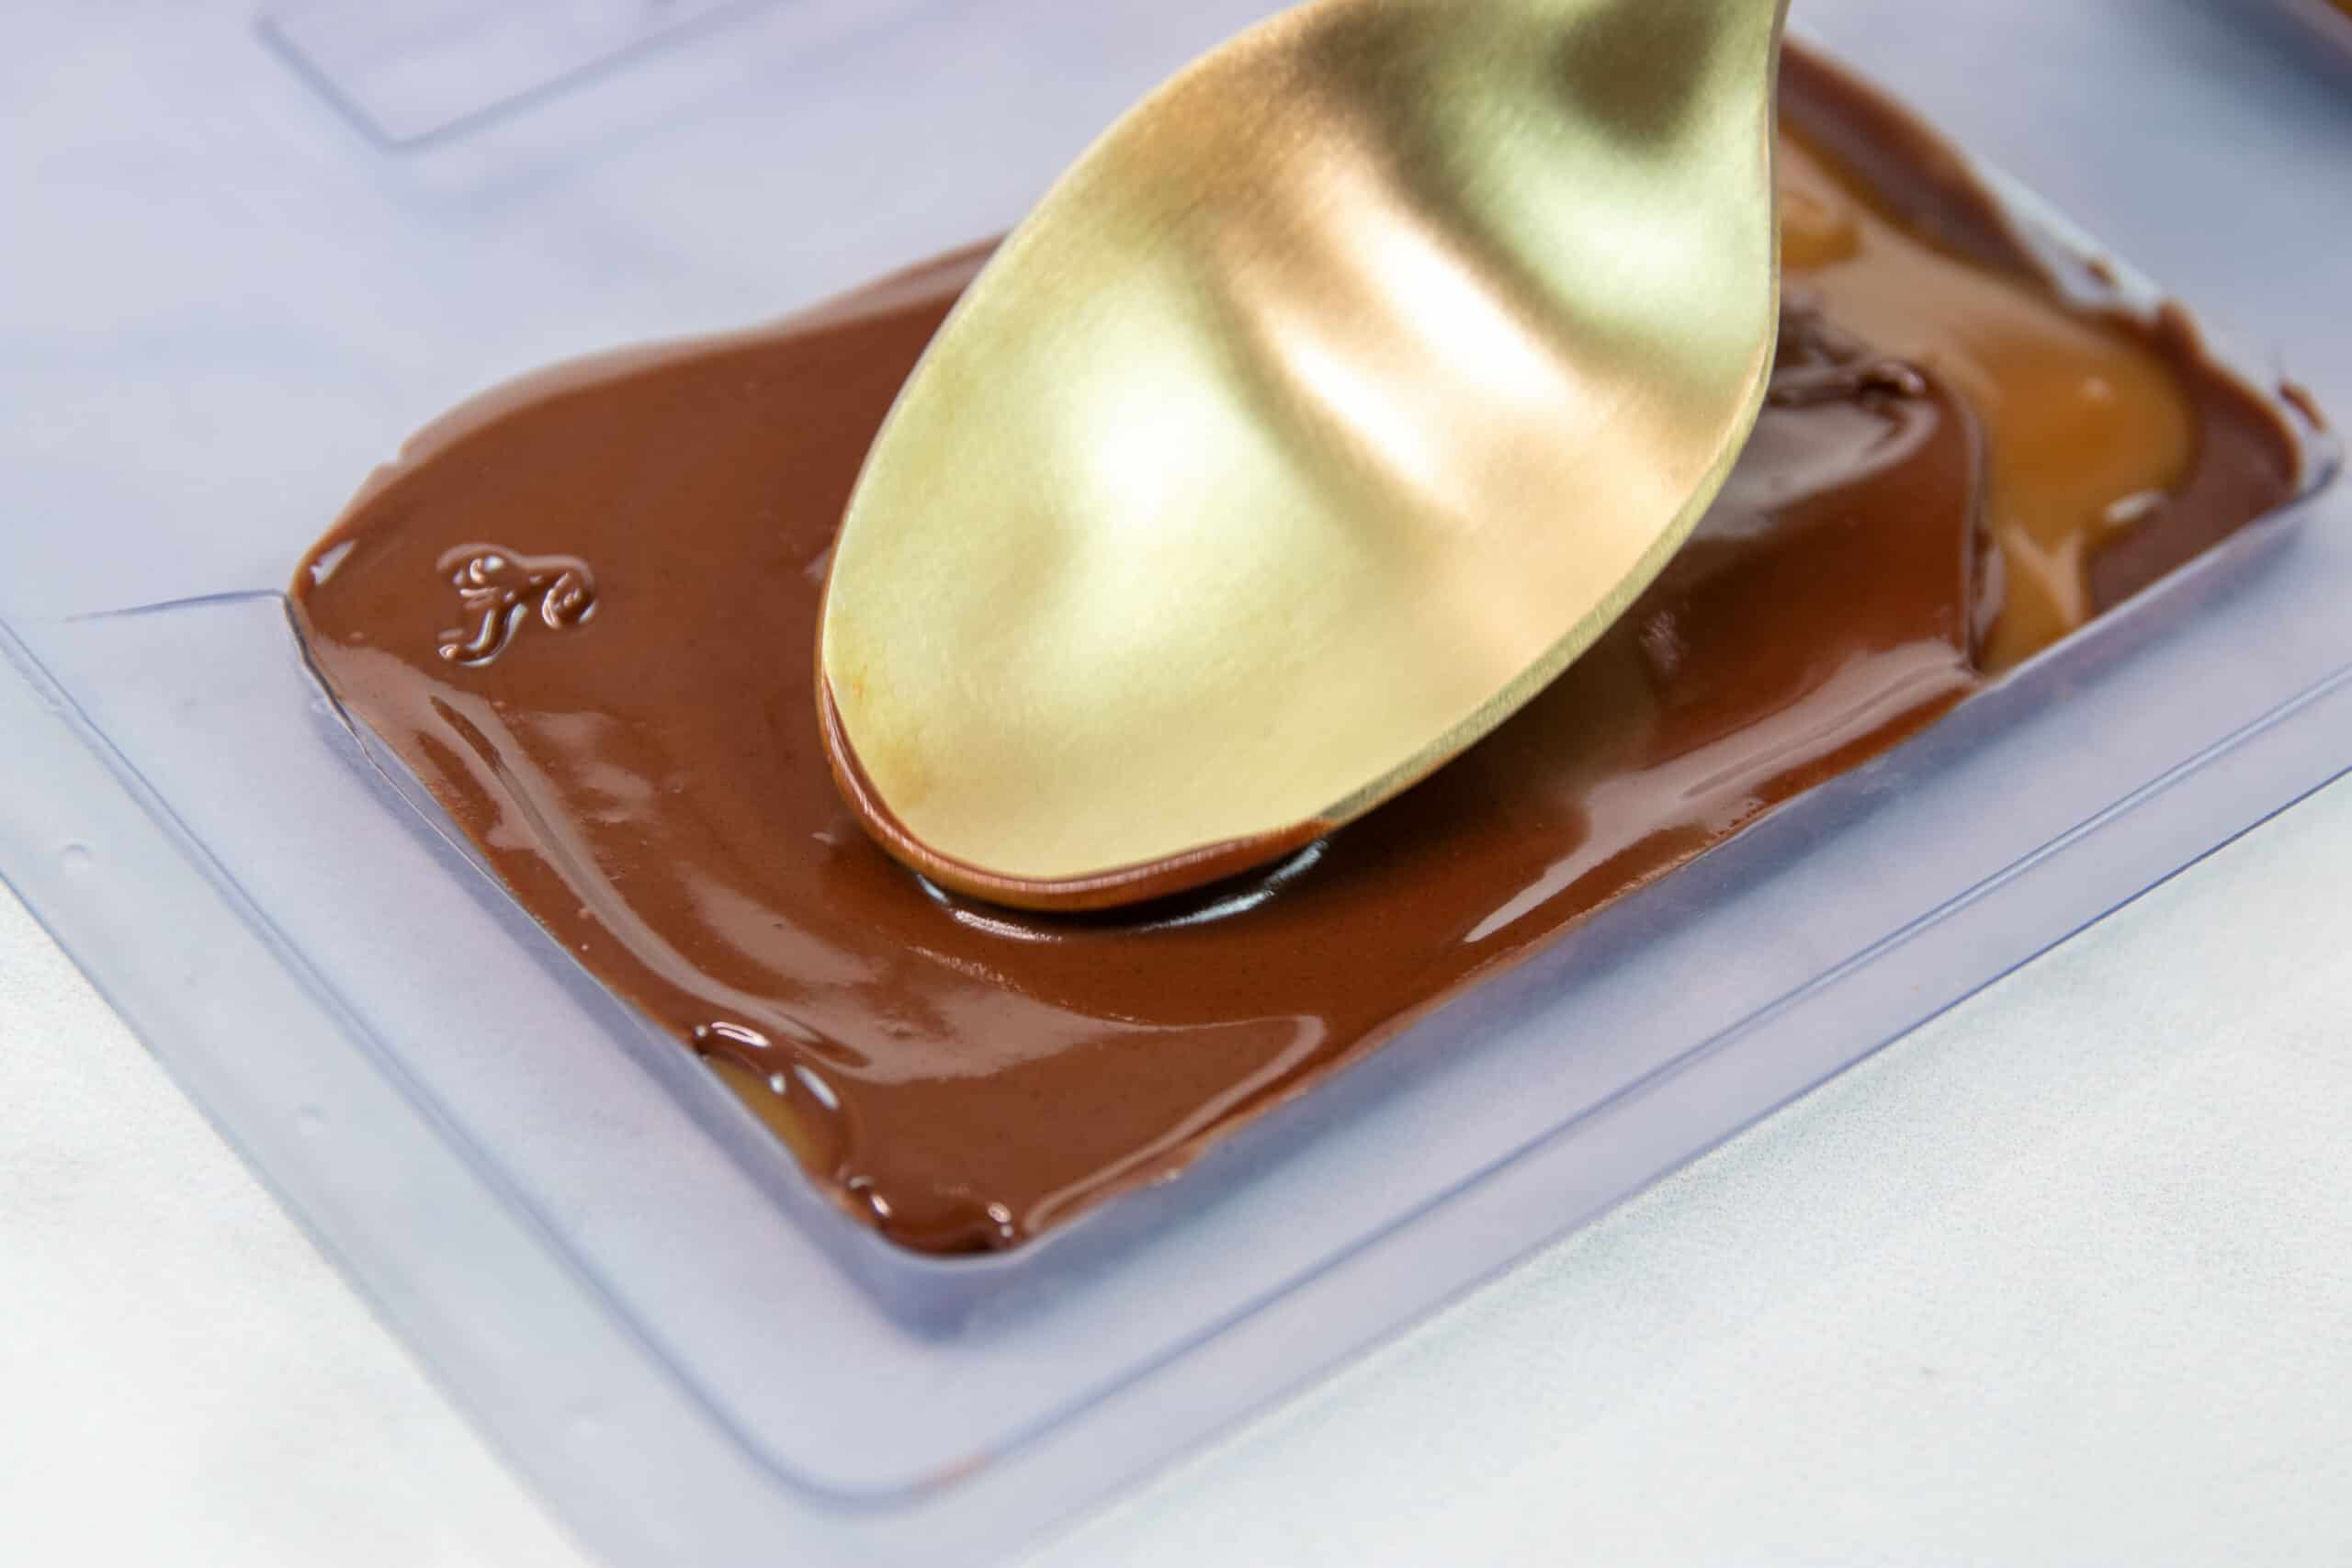 Keto Chocolate Caramel Bars Recipe